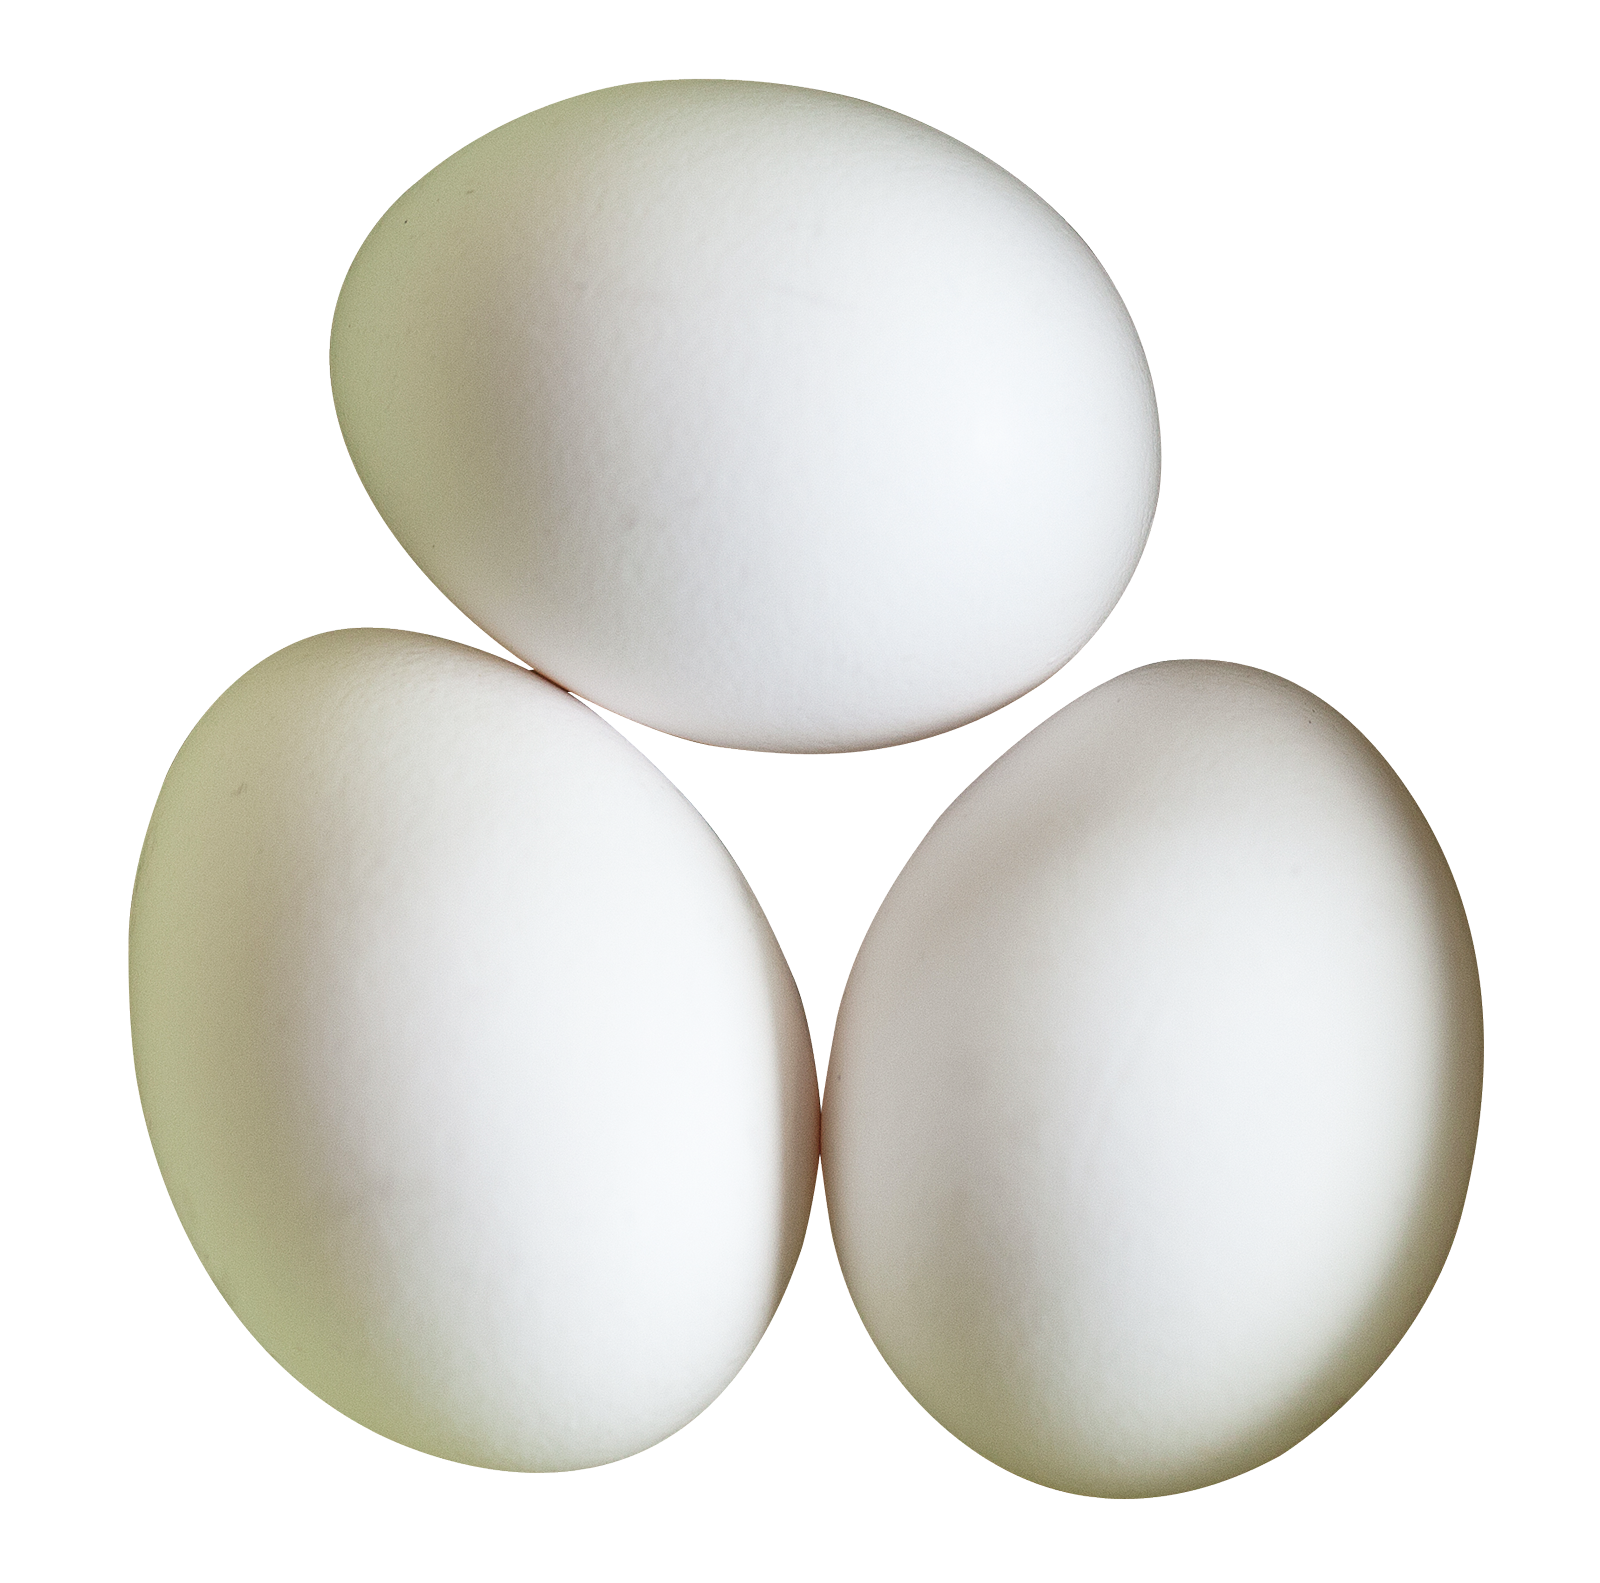 Three White Eggs PNG Image